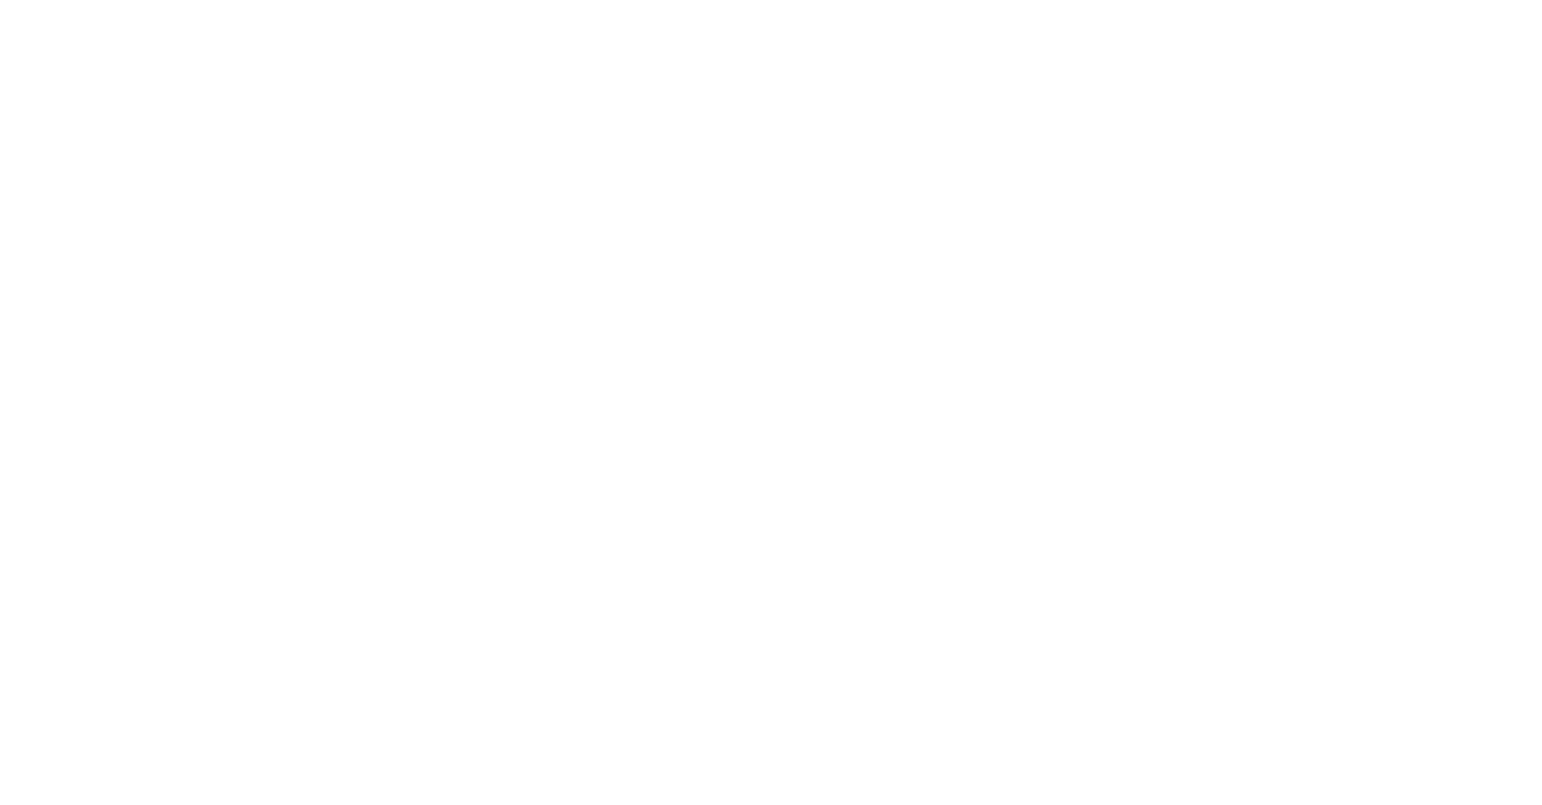 logo-bianco